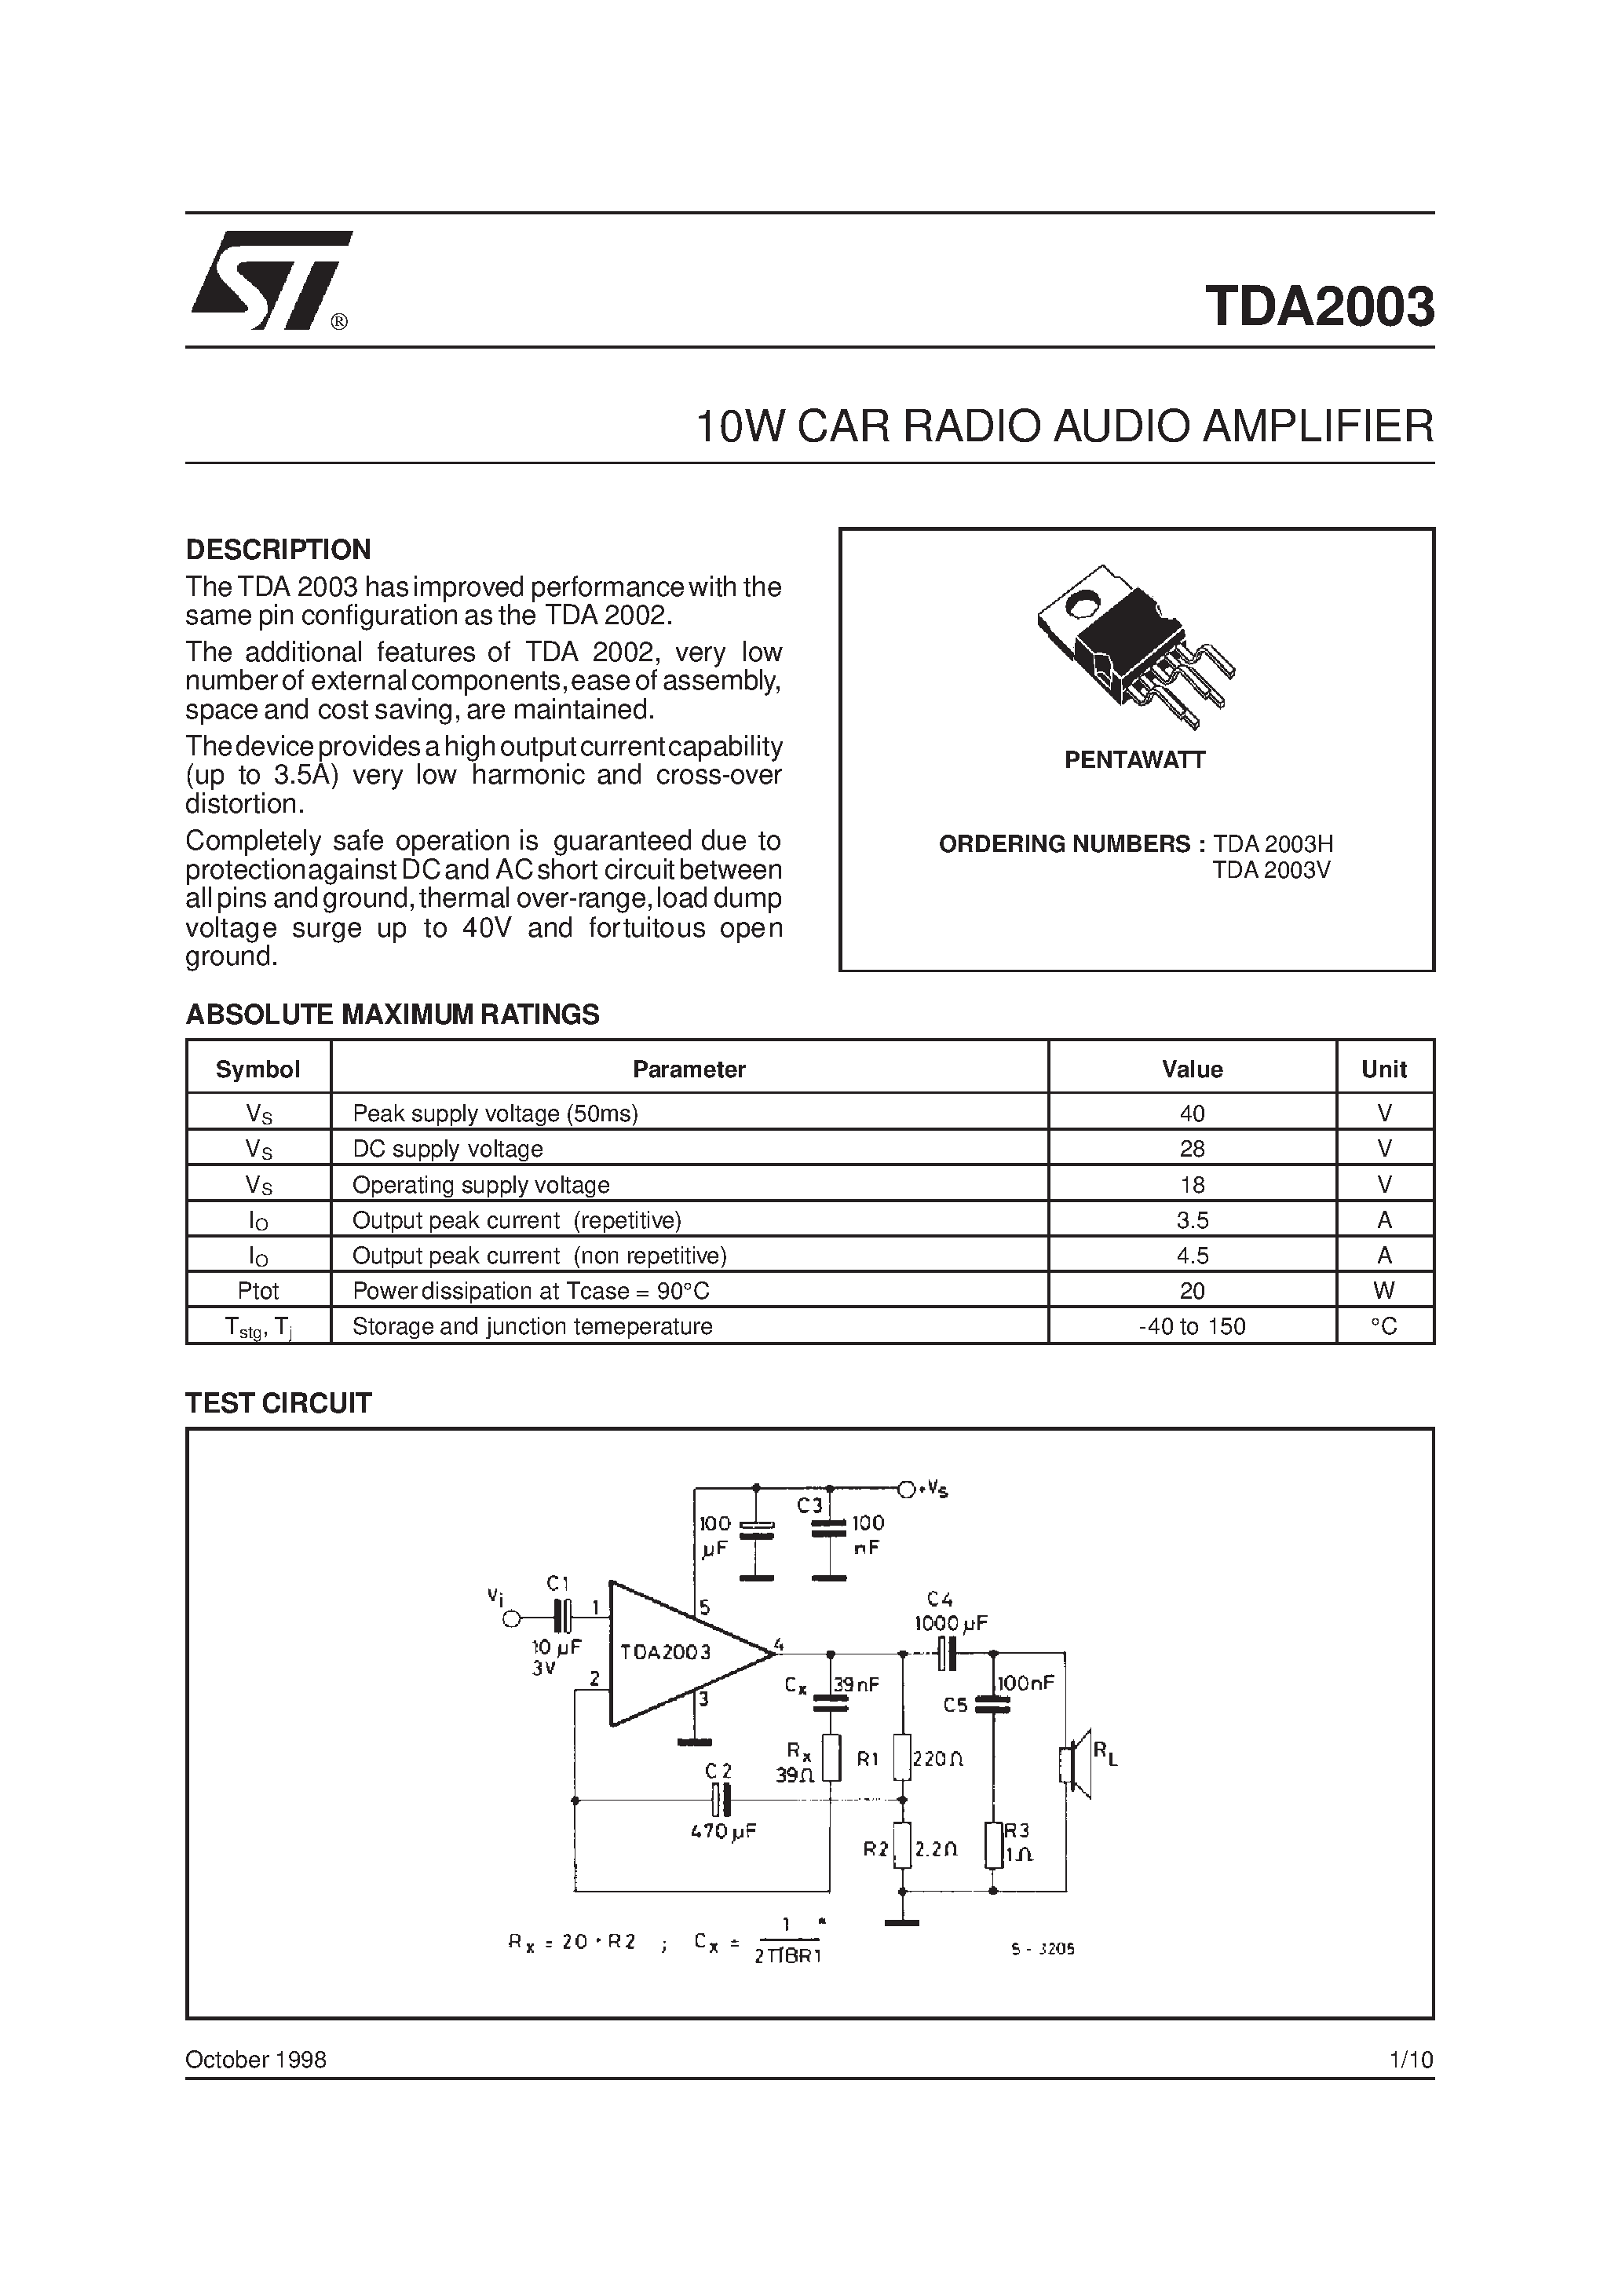 Datasheet TDA2003 - 10W CAR RADIO AUDIO AMPLIFIER page 1